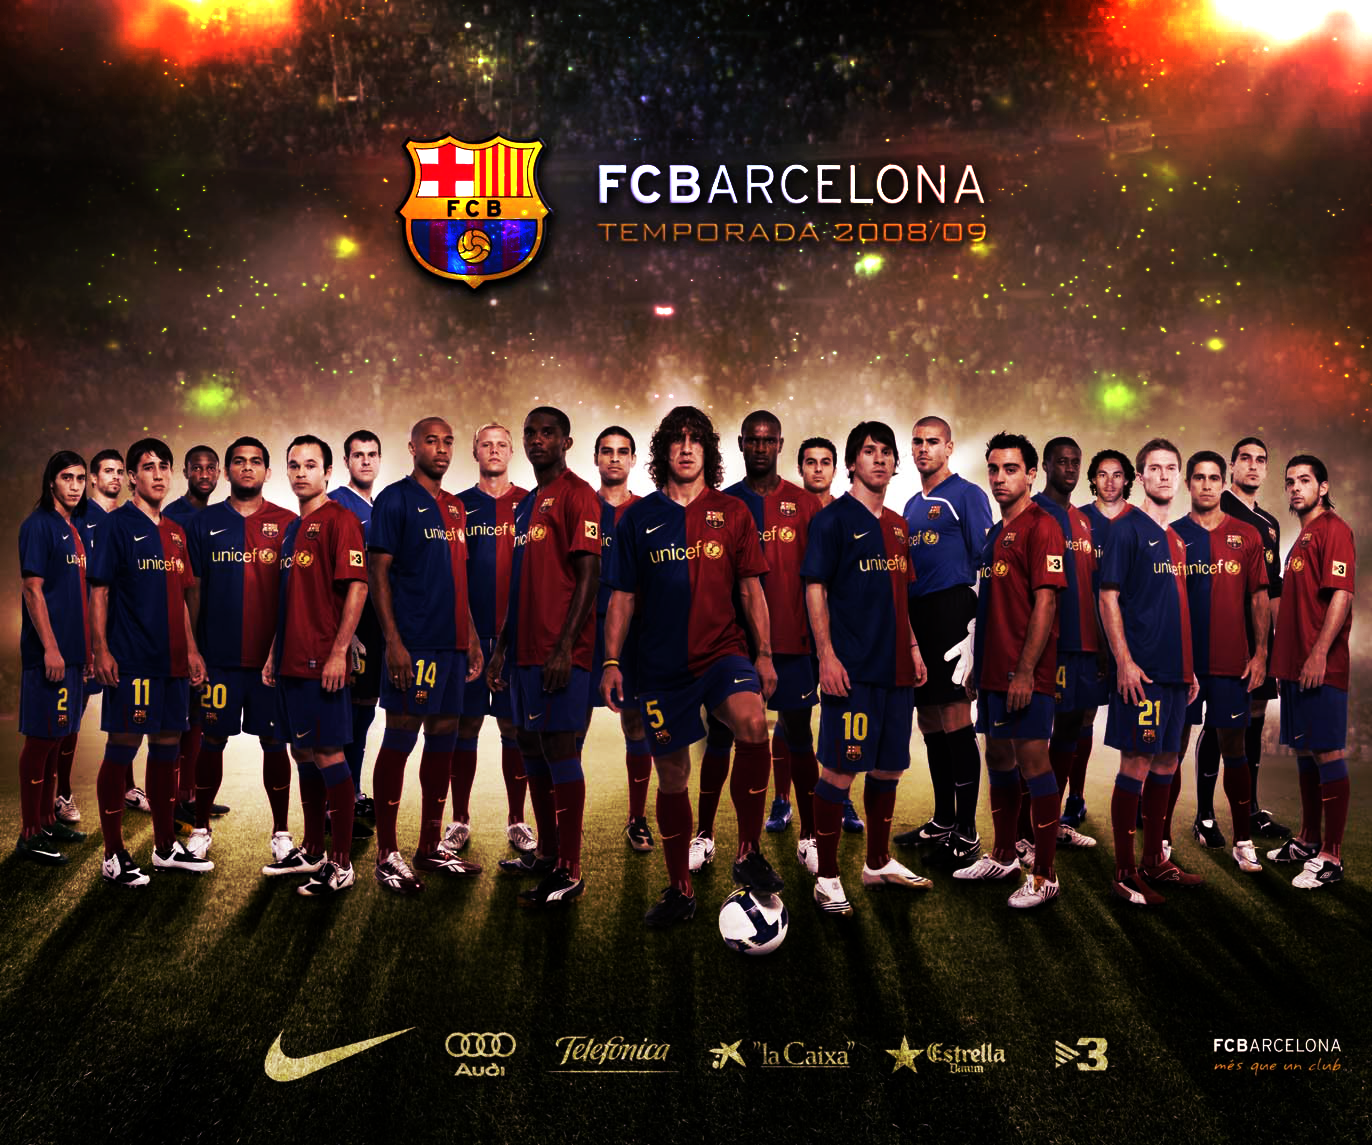 Fc Barcelona Team Wallpaper Imgkid Com The Image Afalchi Free images wallpape [afalchi.blogspot.com]